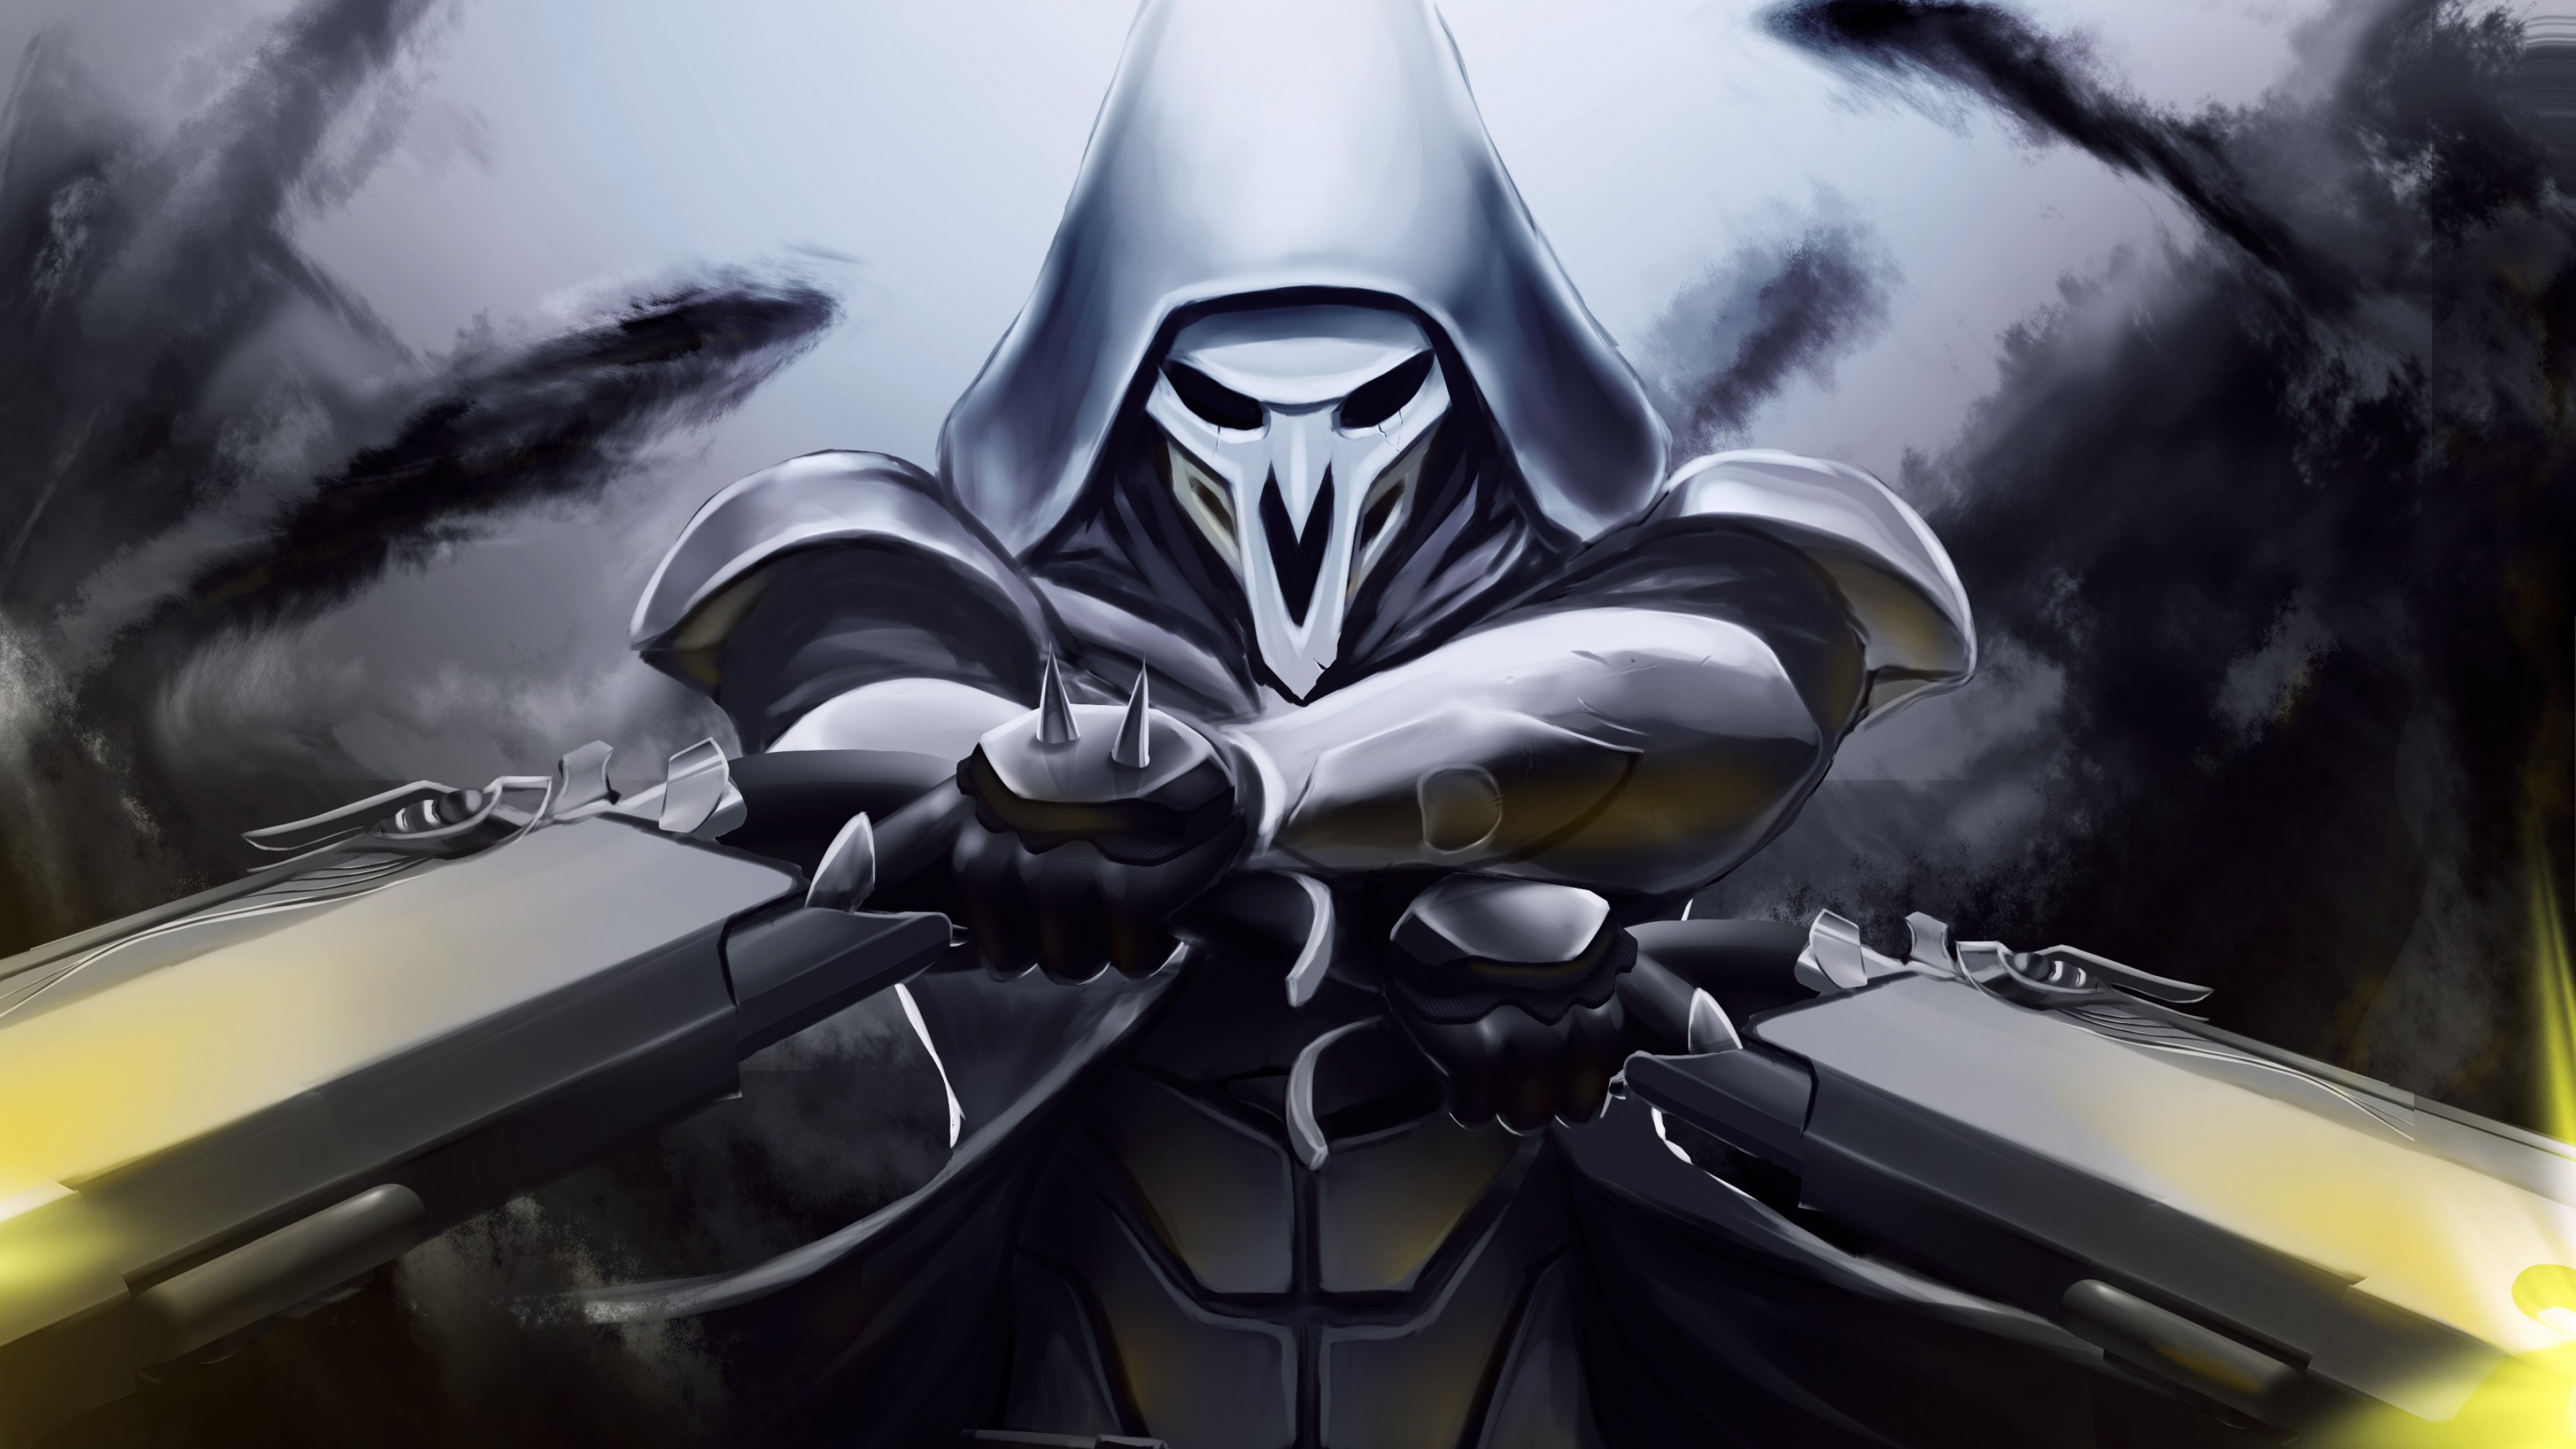 Reaper Overwatch wallpaper ·① Download free amazing full ...
